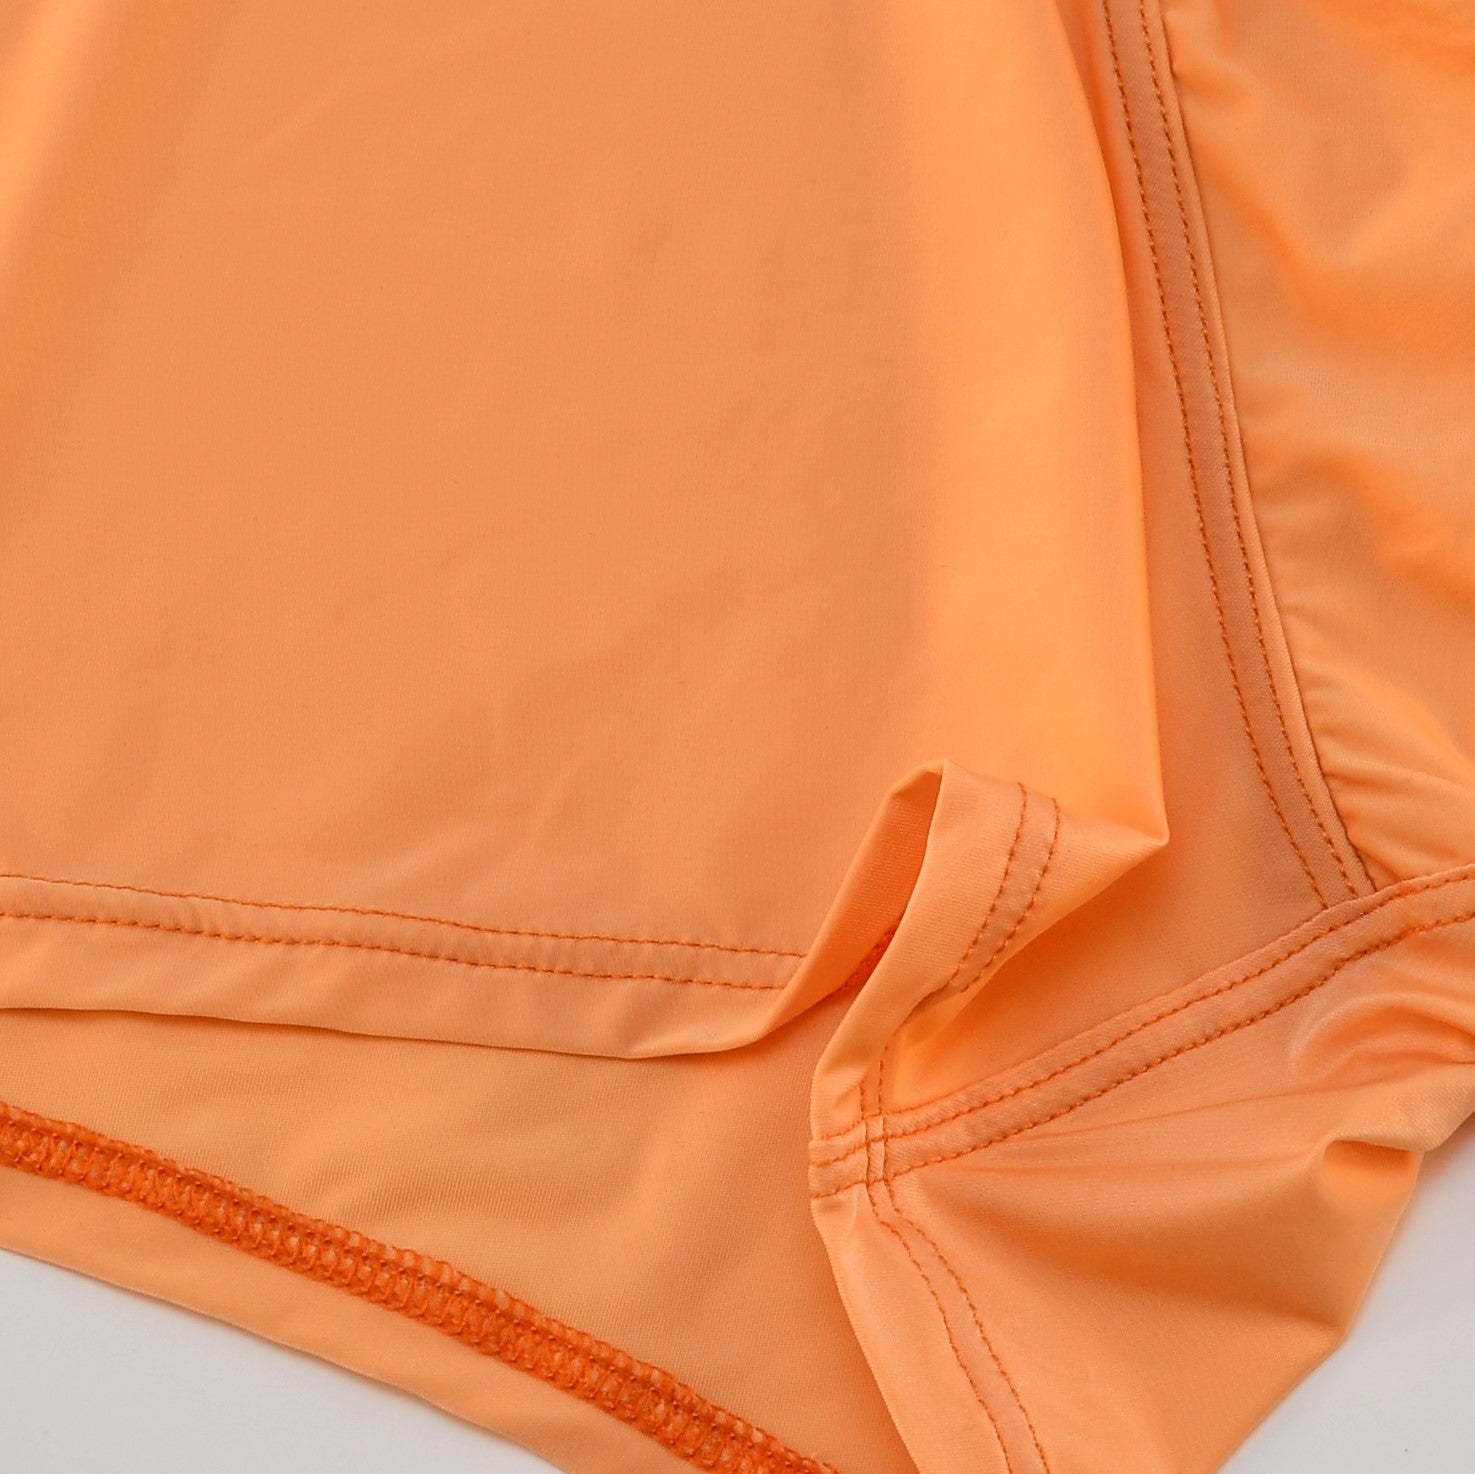 The Designer Boxer Brief Orange is part of the Etseo Campus Men's Underwear Collection of Designer Boxer Briefs and Designer Bikini Briefs. At Etseo we manufacture Premium Designer Men's Underwear. fabric detail